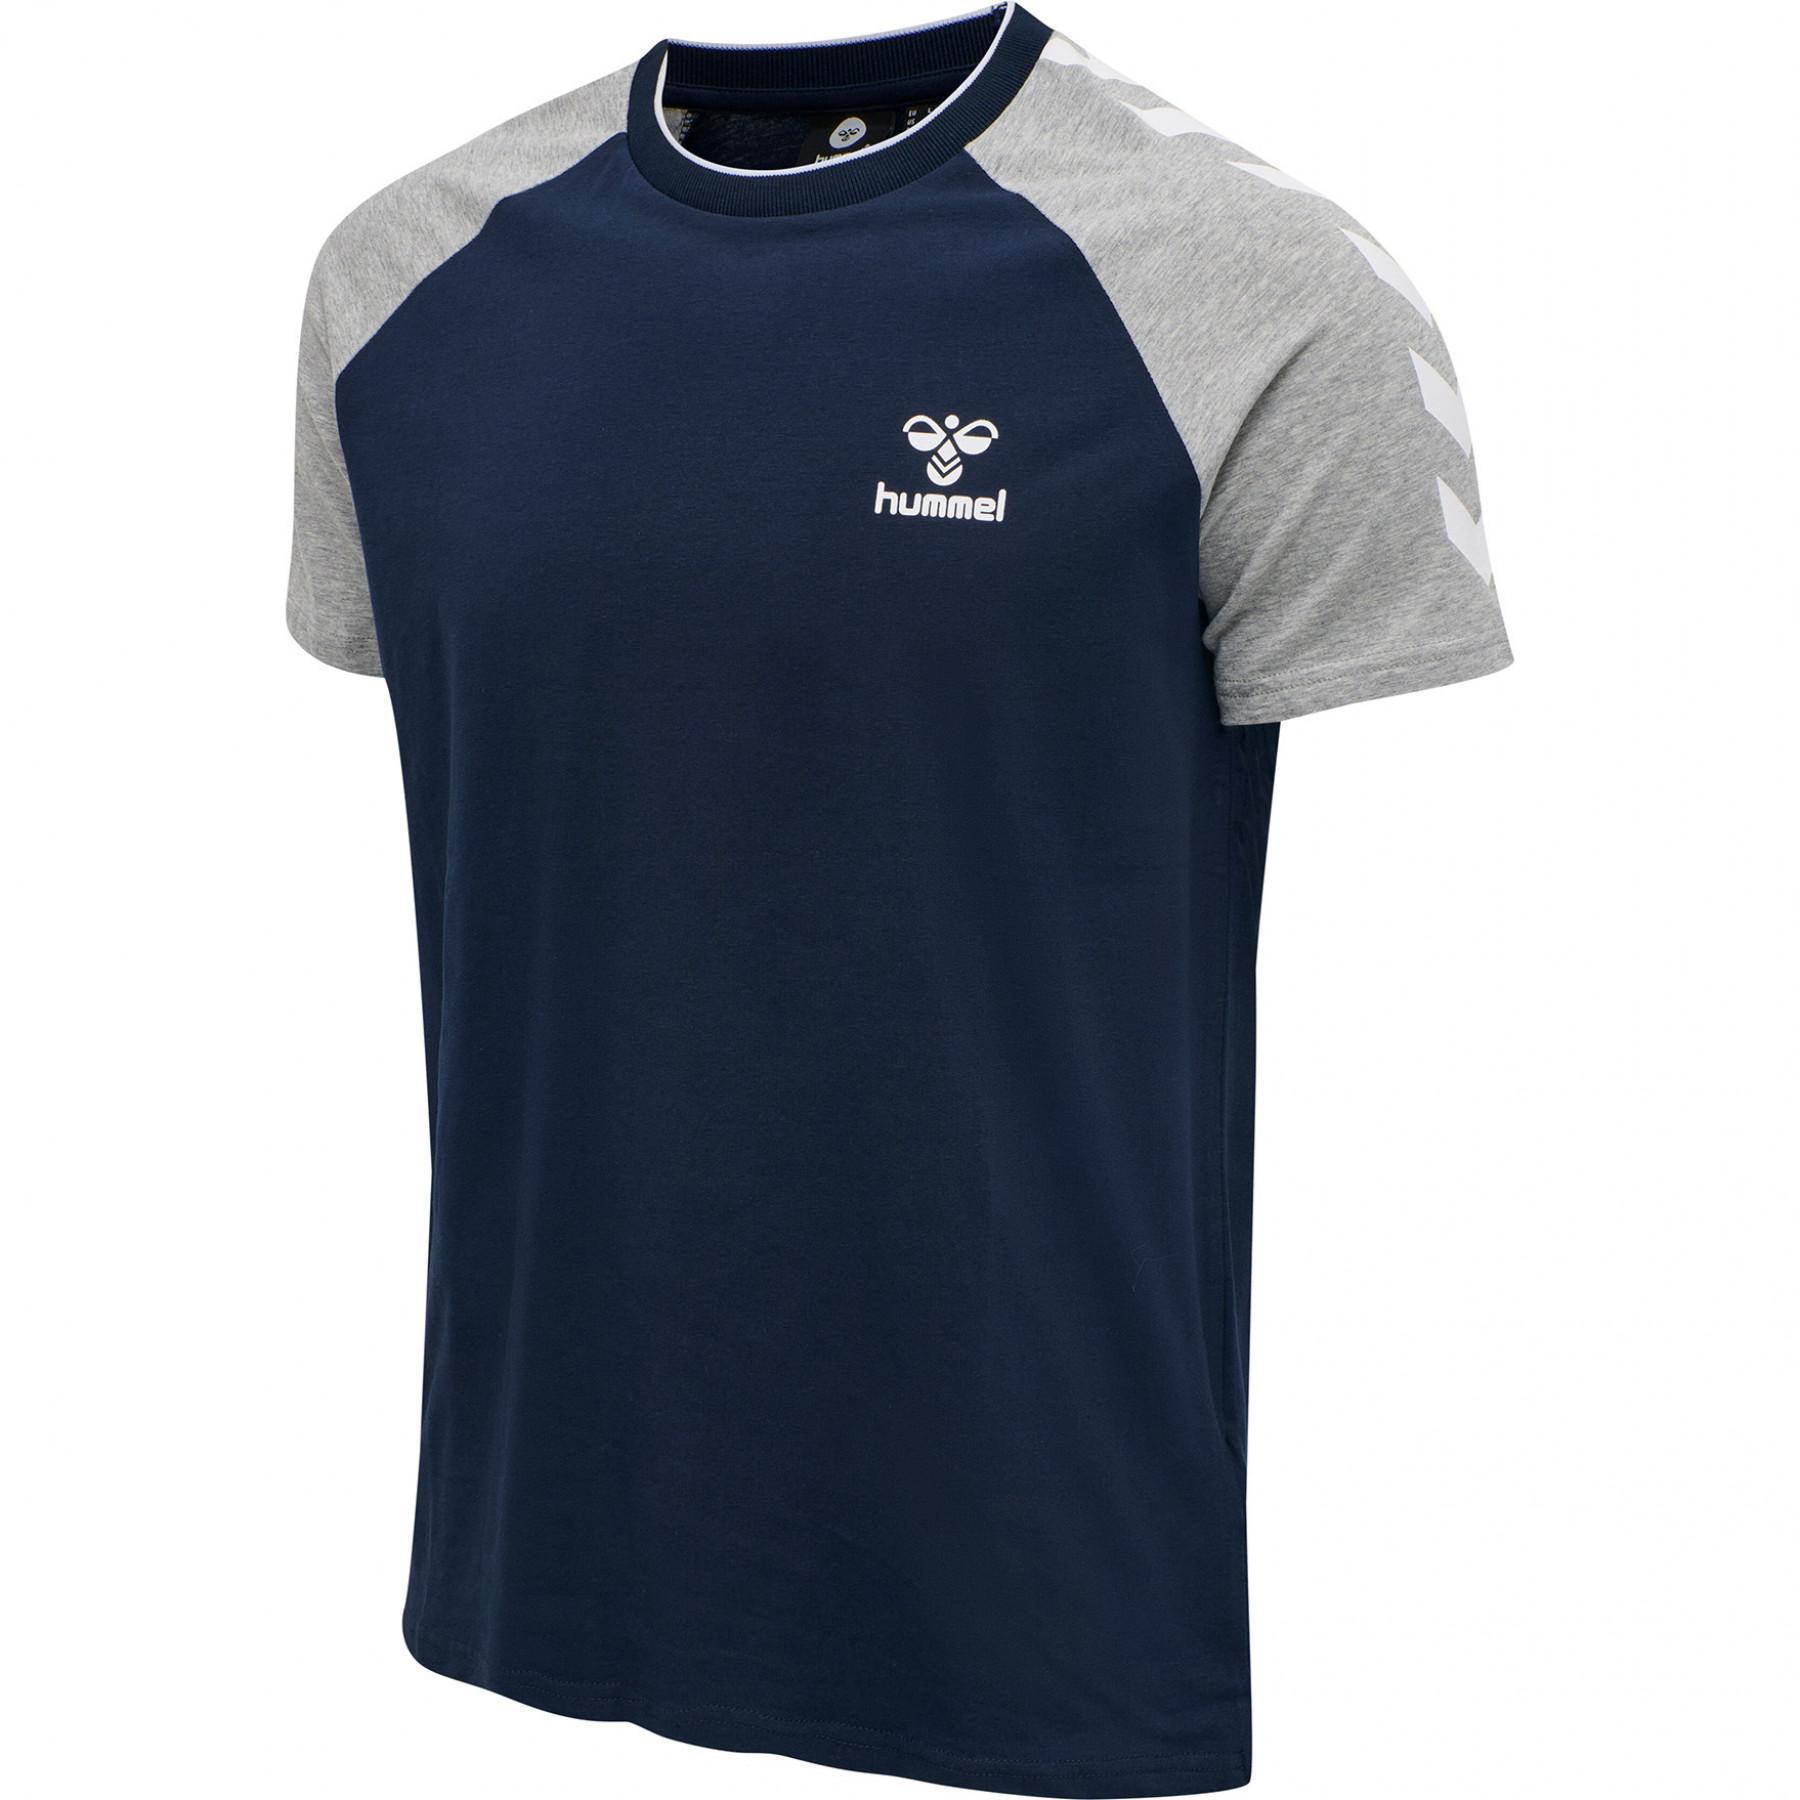 polos hmlmark Hummel Handball and T-shirt Textile - - wear - T-shirts